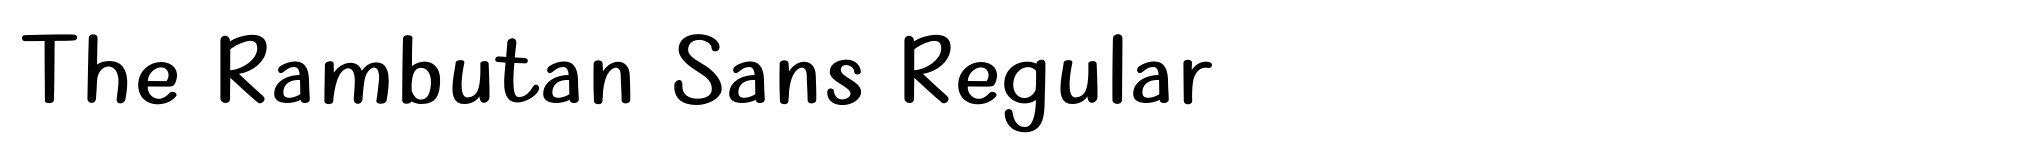 The Rambutan Sans Regular image